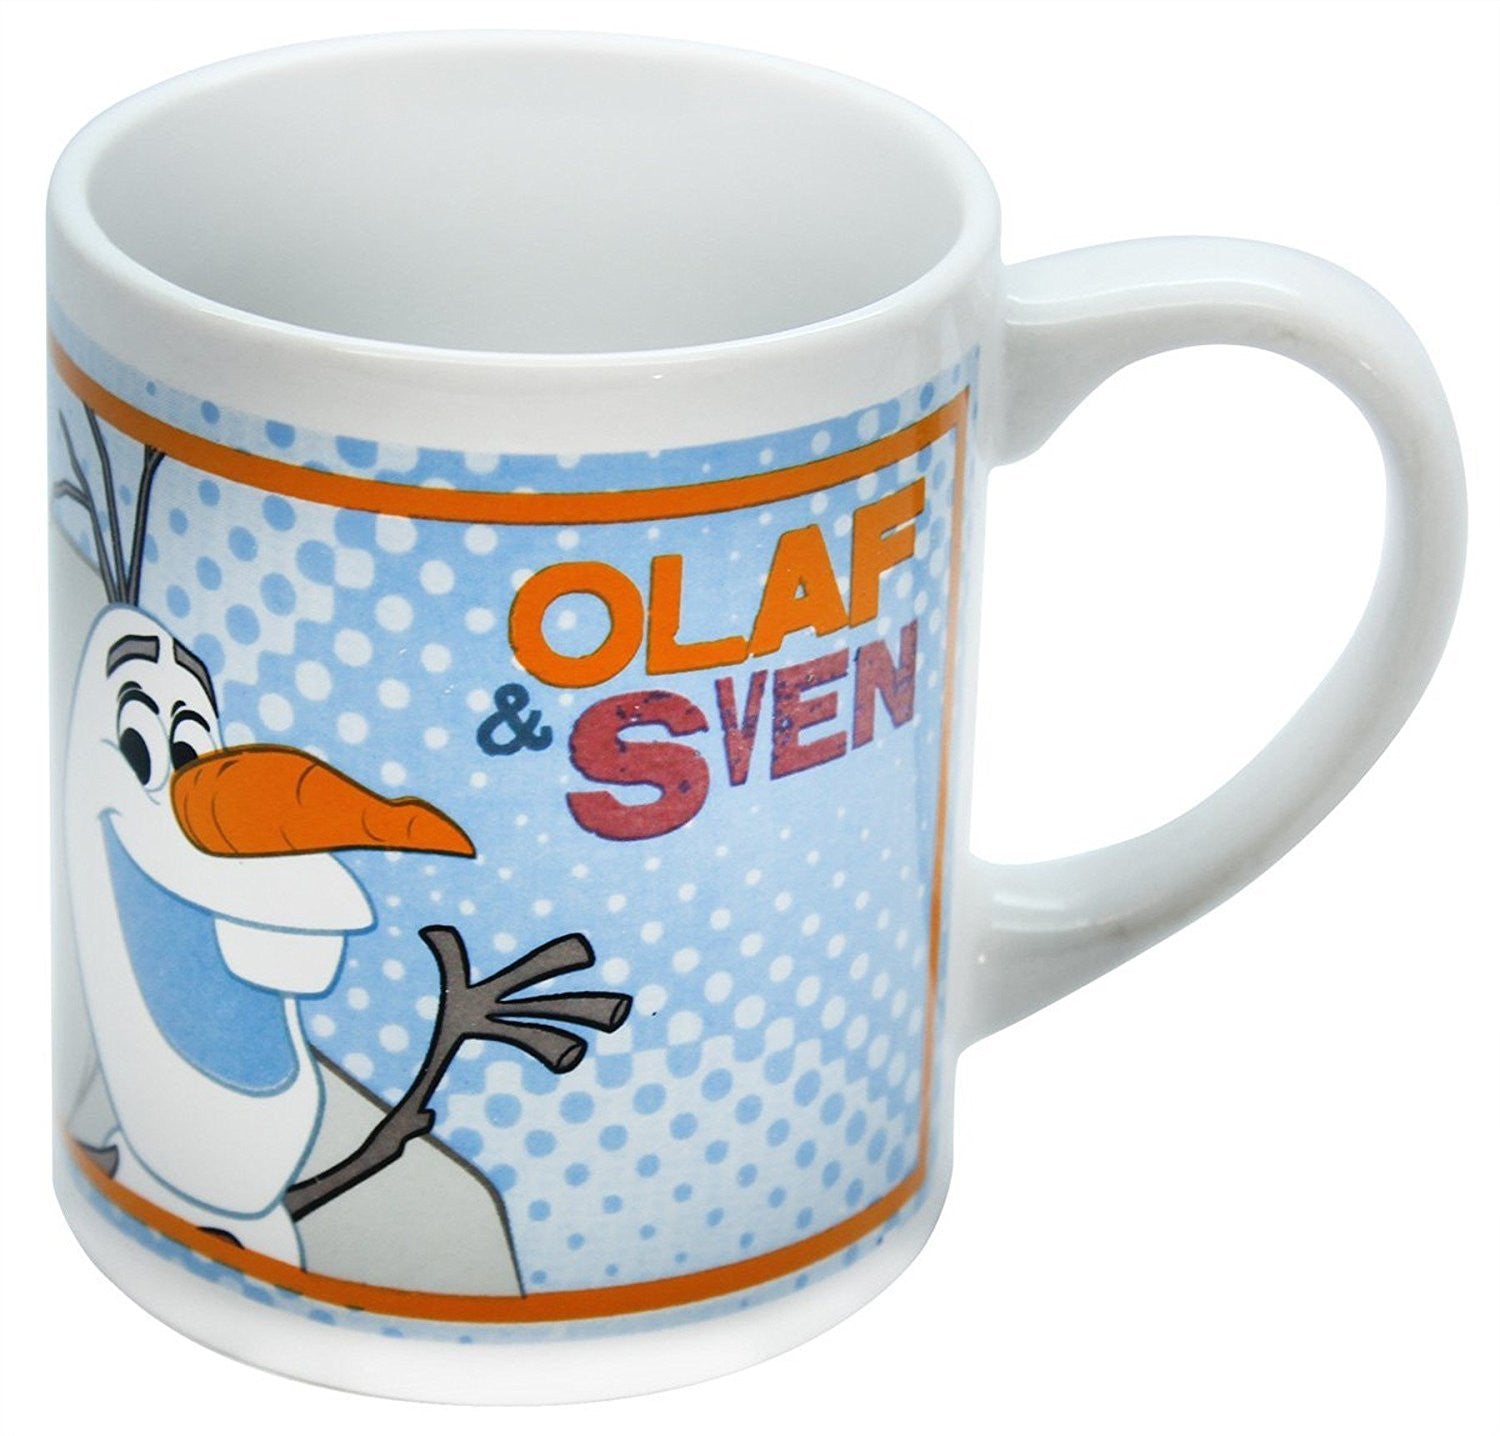 Disneys Frozen Olaf and Sven 8cm Mug - hanrattycraftsgifts.co.uk